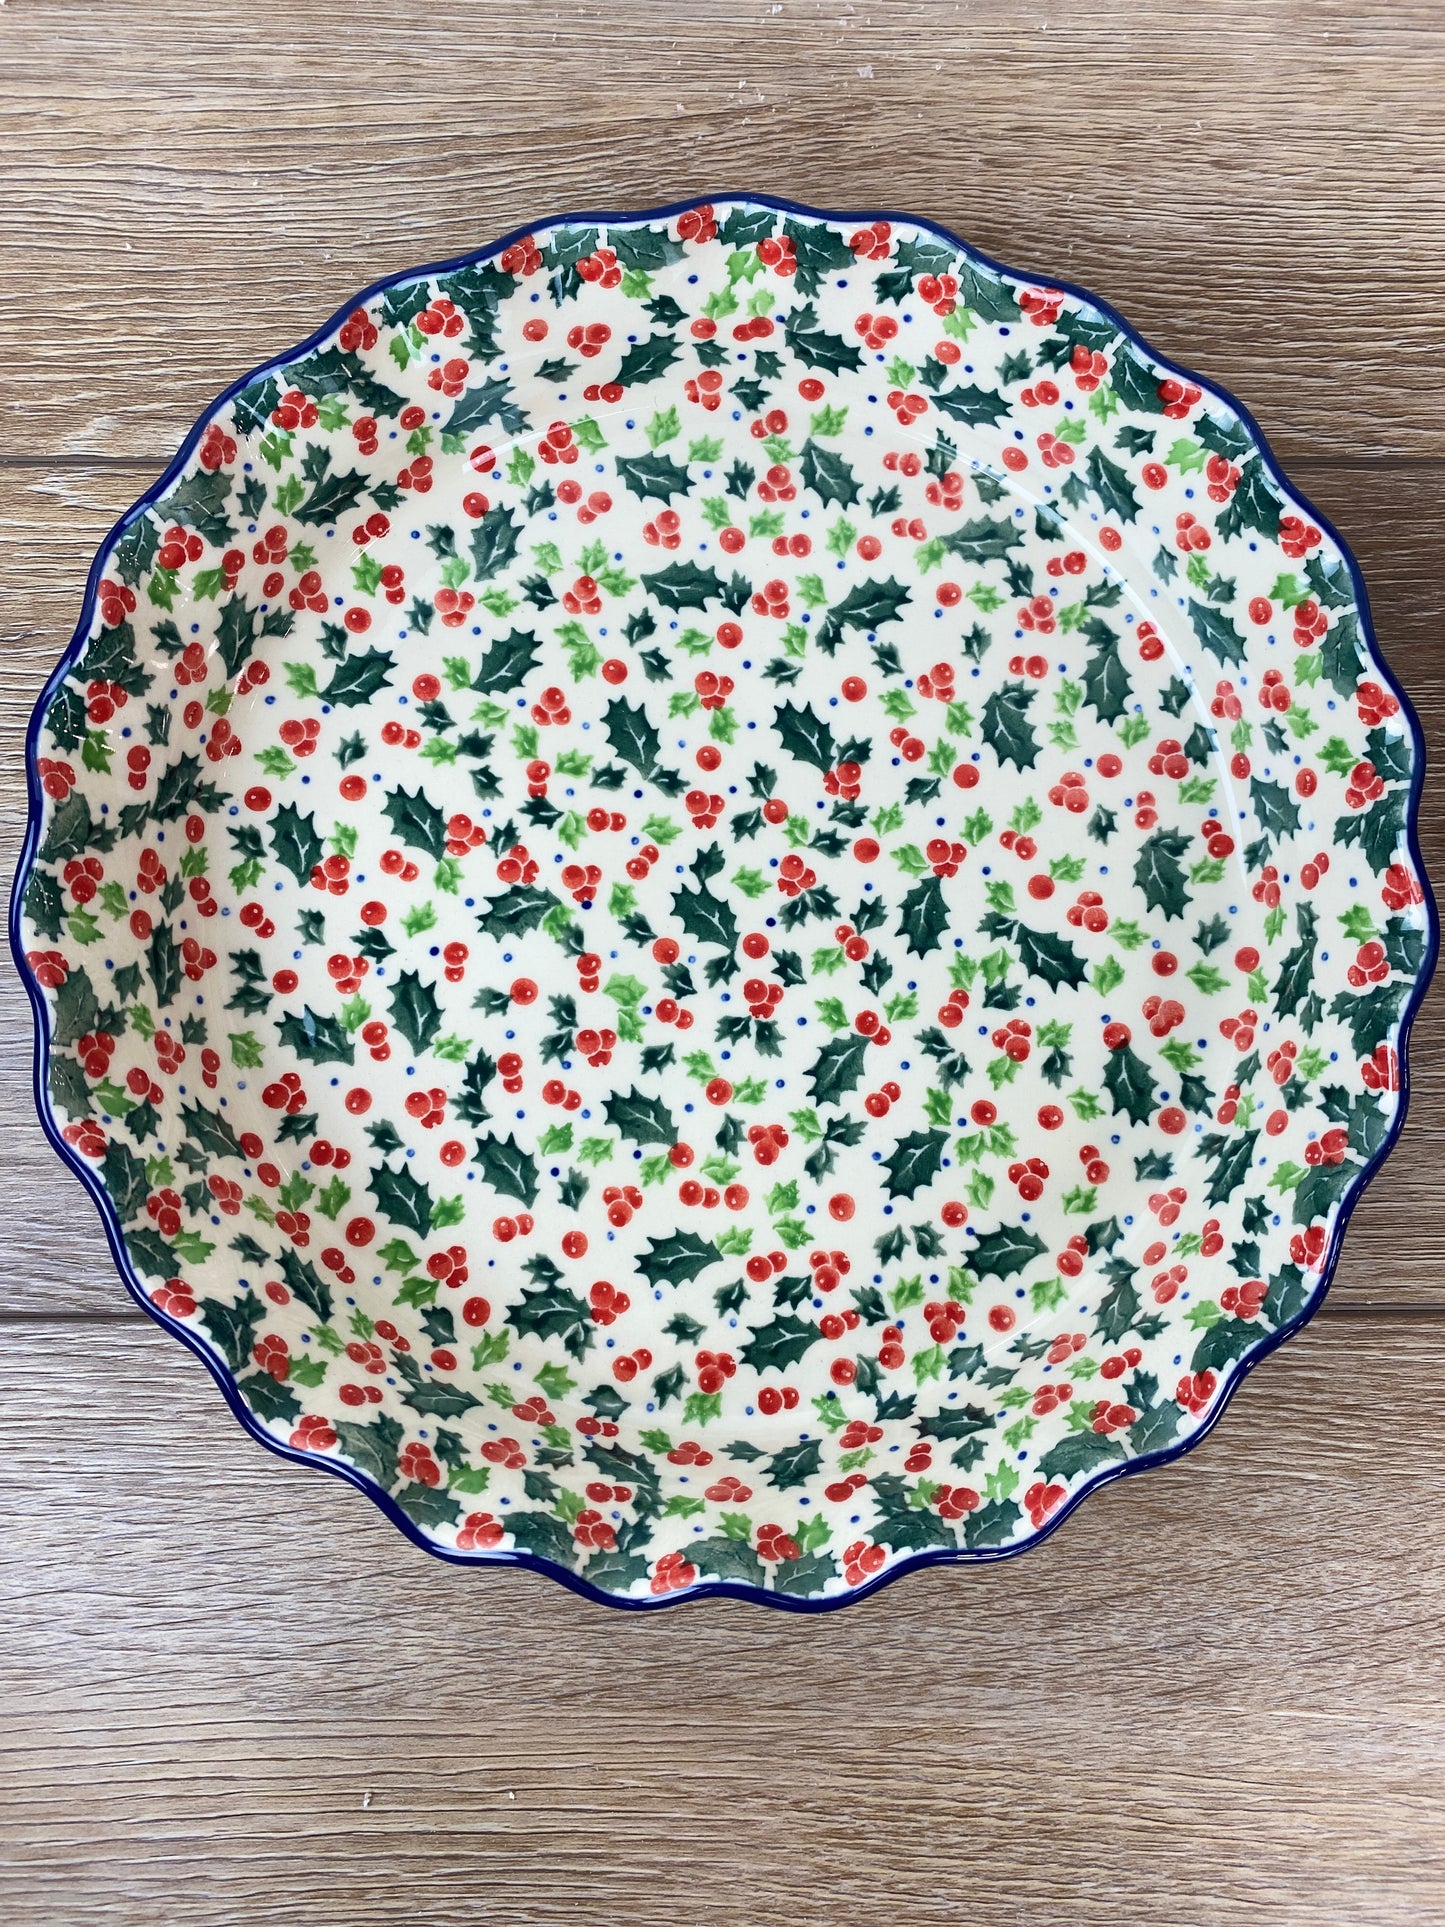 SALE Ruffled Unikat Pie Plate - Shape 636 Pattern U4874